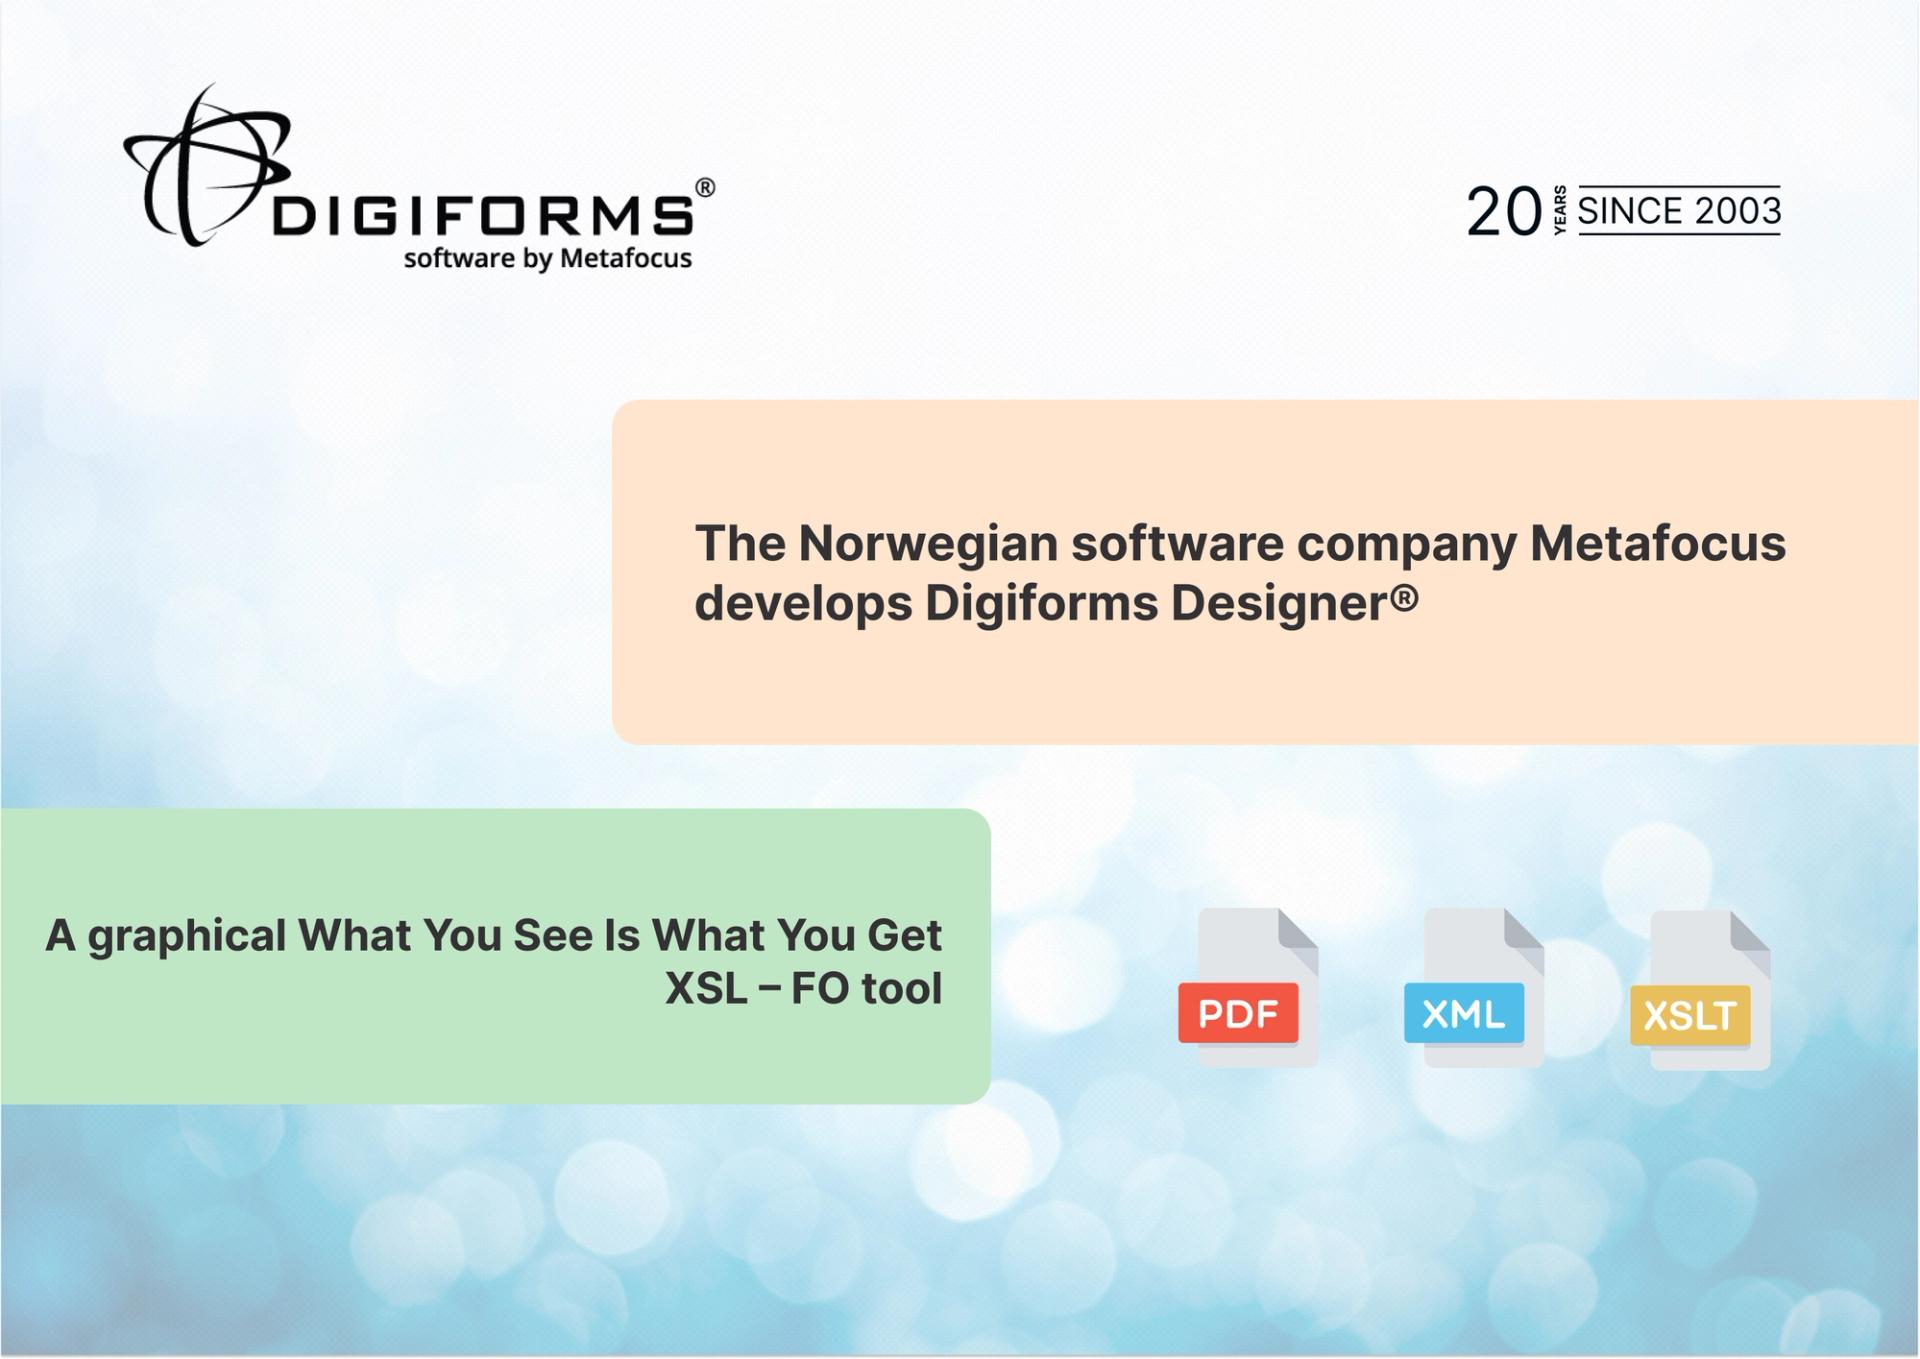 Digitforms overview